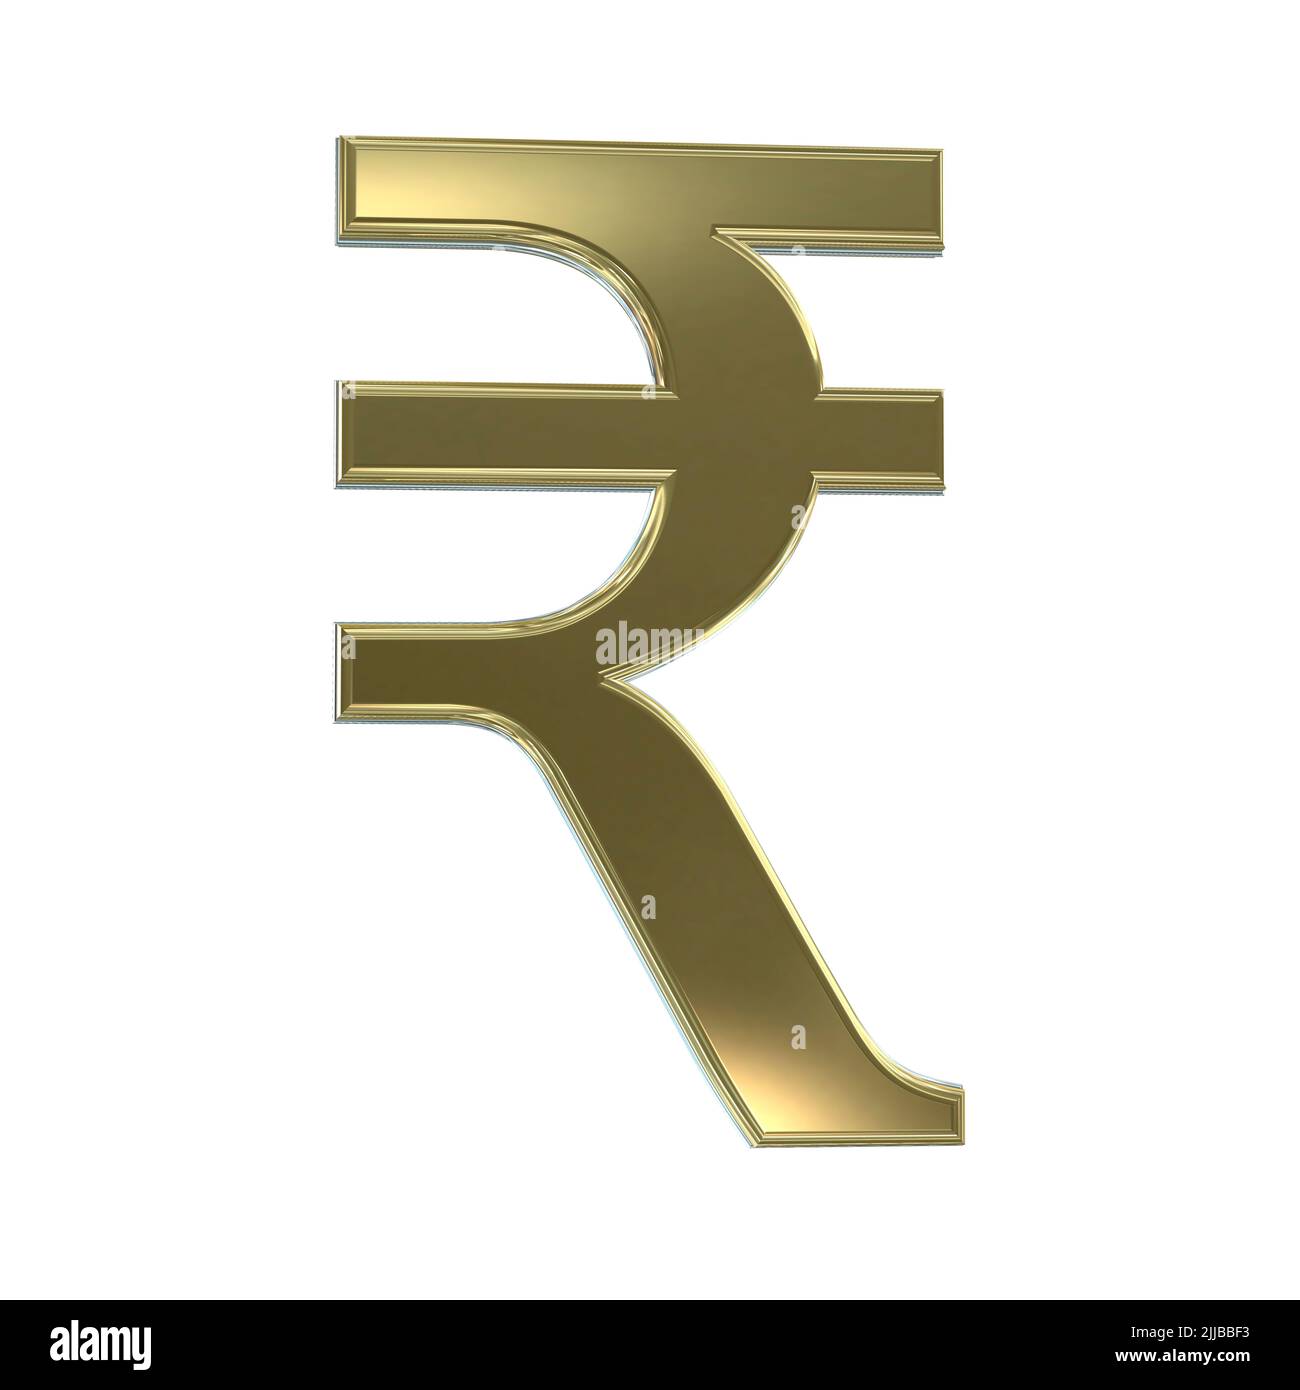 3D oro plata rupia moneda símbolo símbolos signo signos recortados aislados sobre fondo blanco Foto de stock